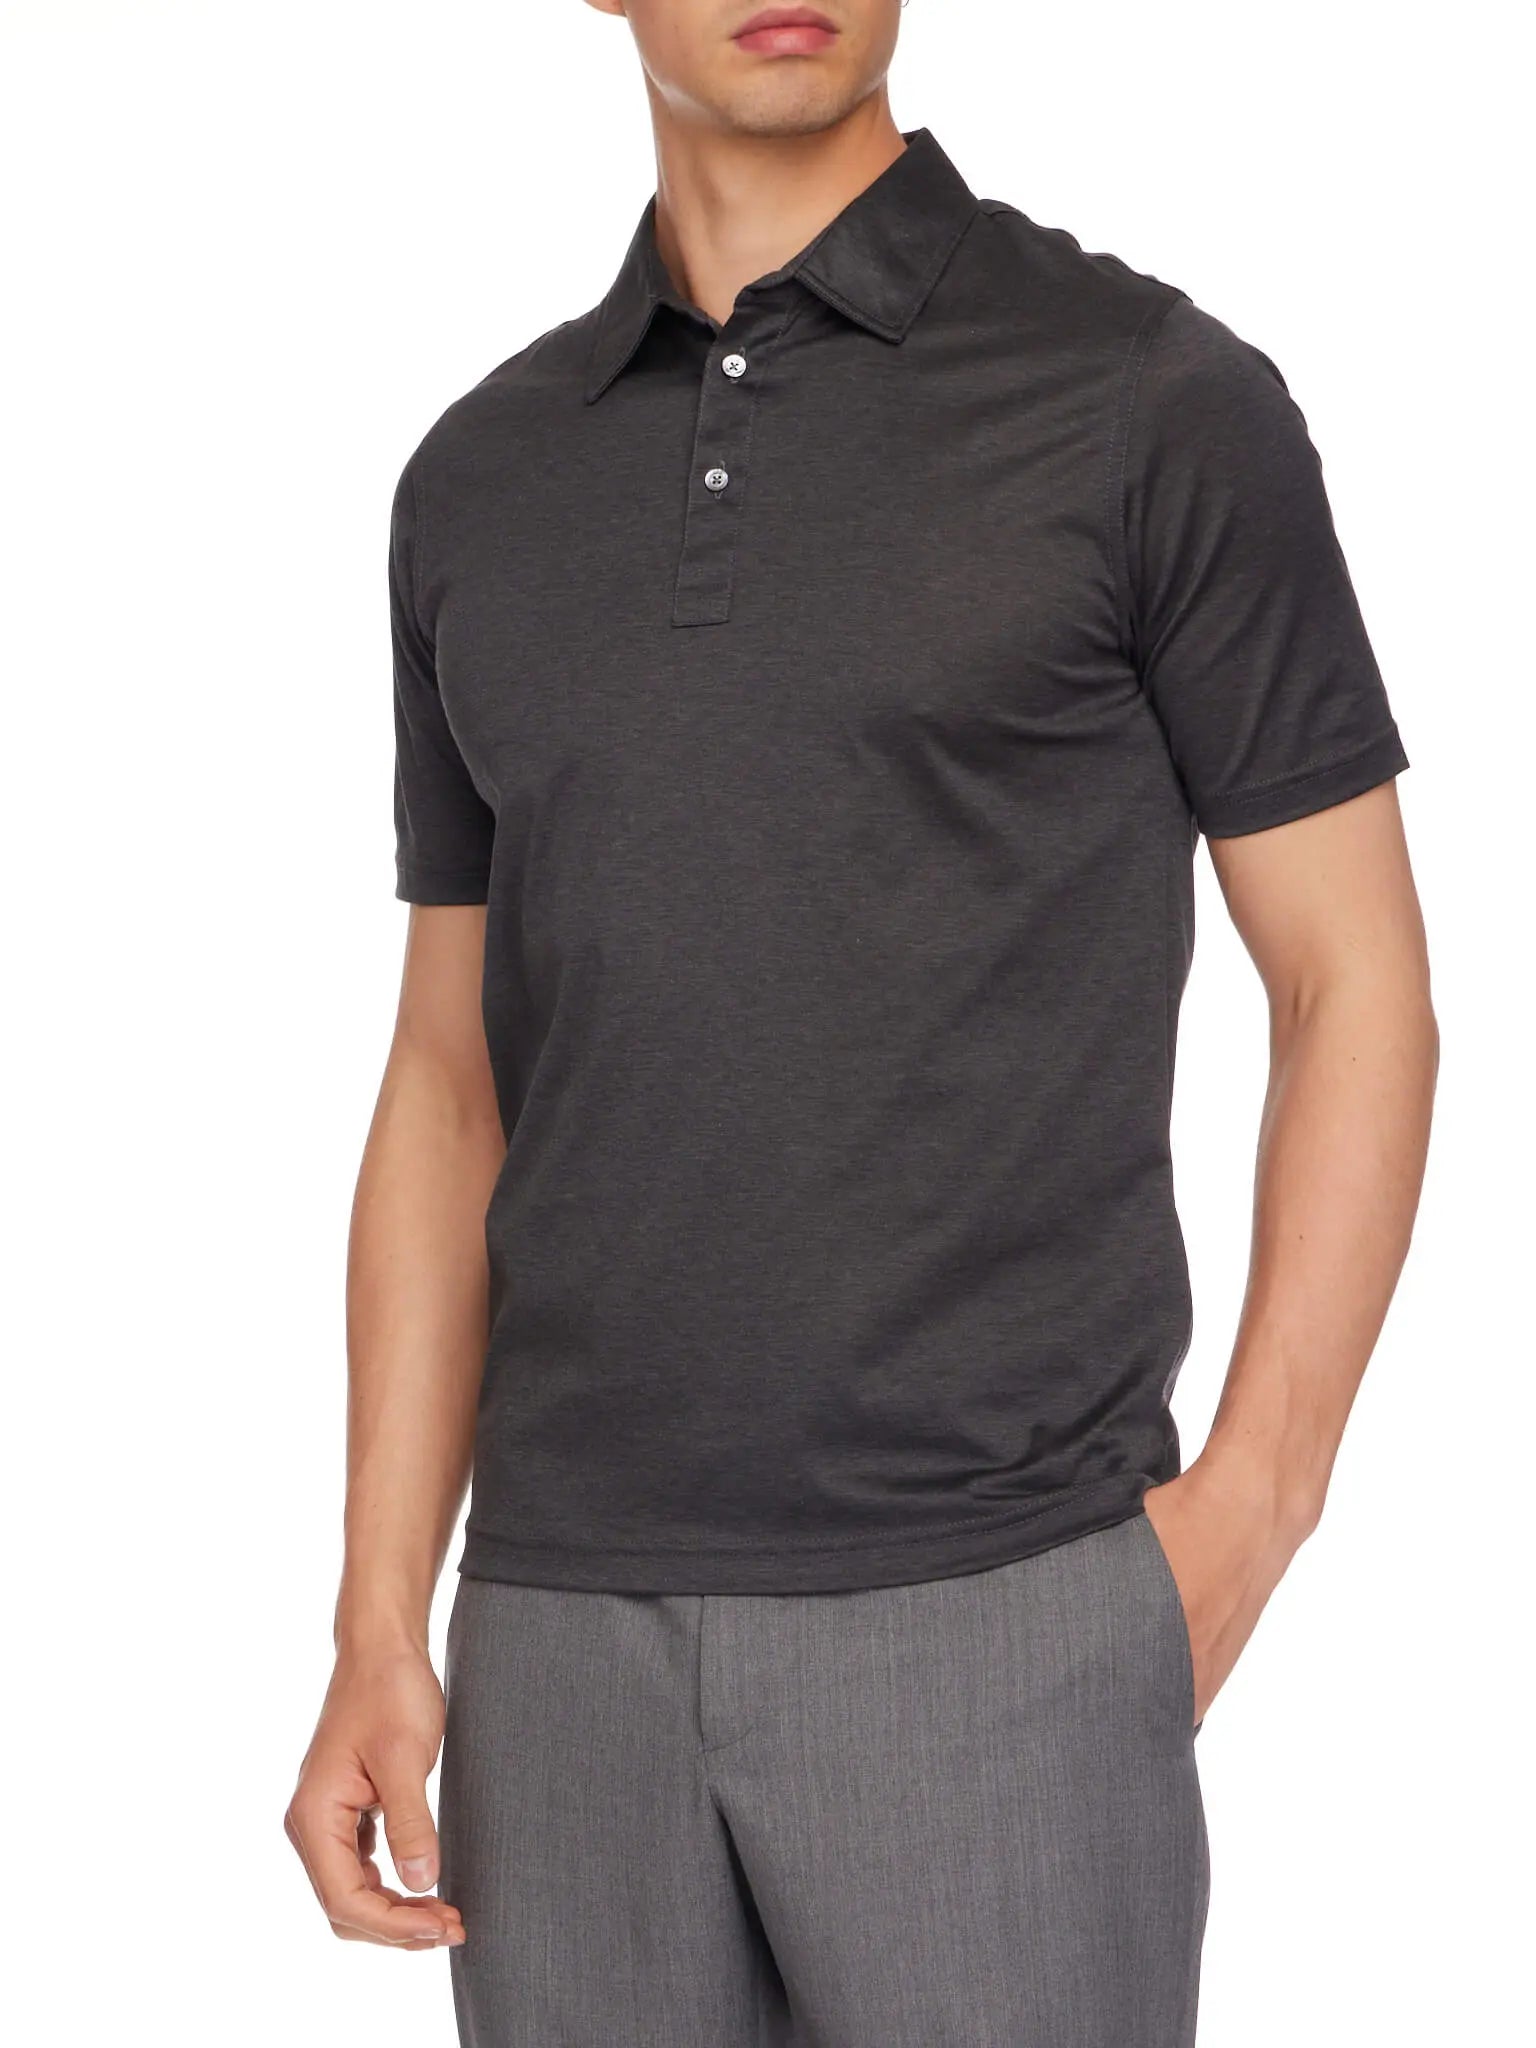 Men's Cotton Jersey Polo Shirt in Dark Grey, M